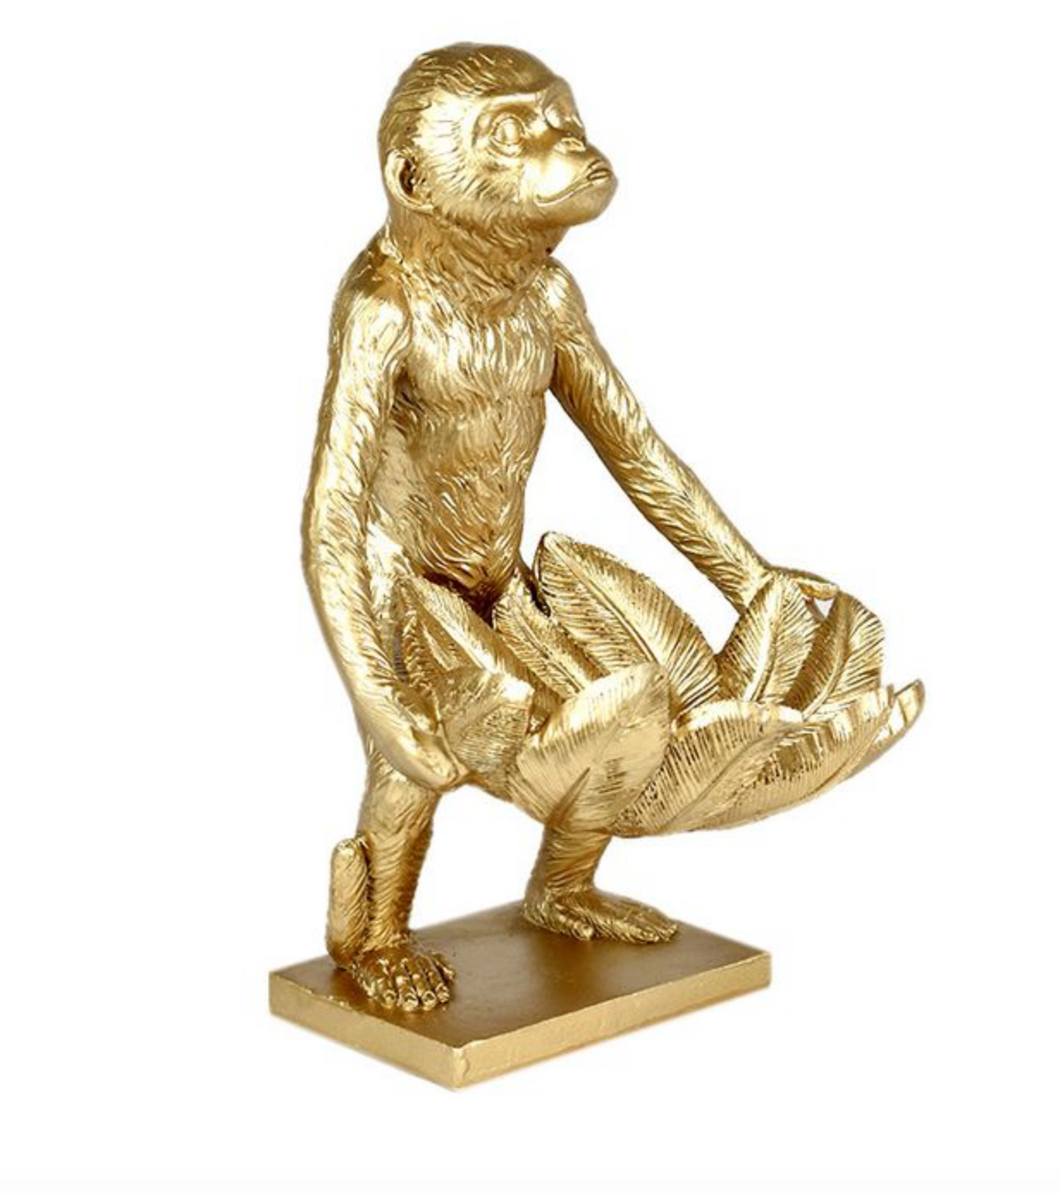 Mac the Monkey Sculpture